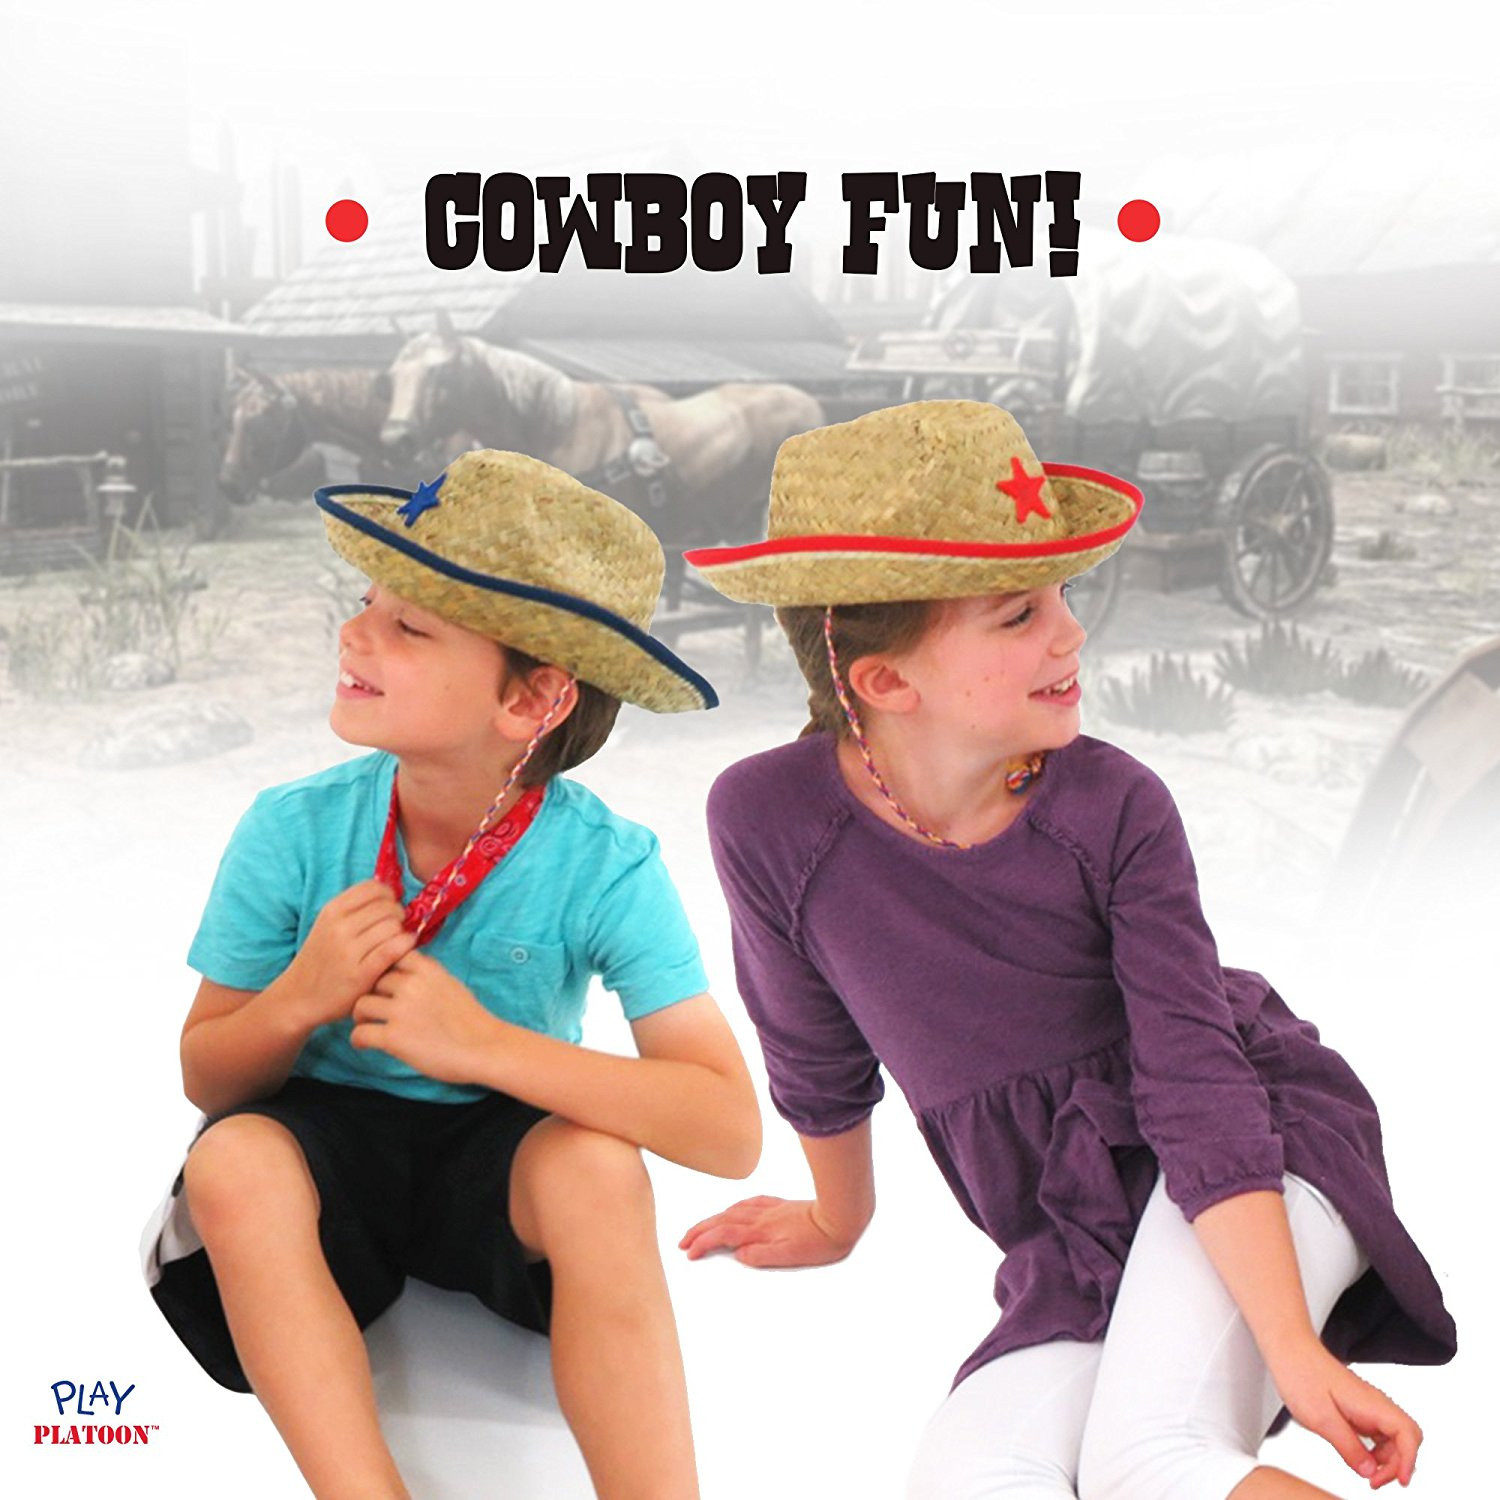 Kids Cowboy Hats Party
 Dozen Straw Cowboy Hats for Kids – Makes Great Birthday